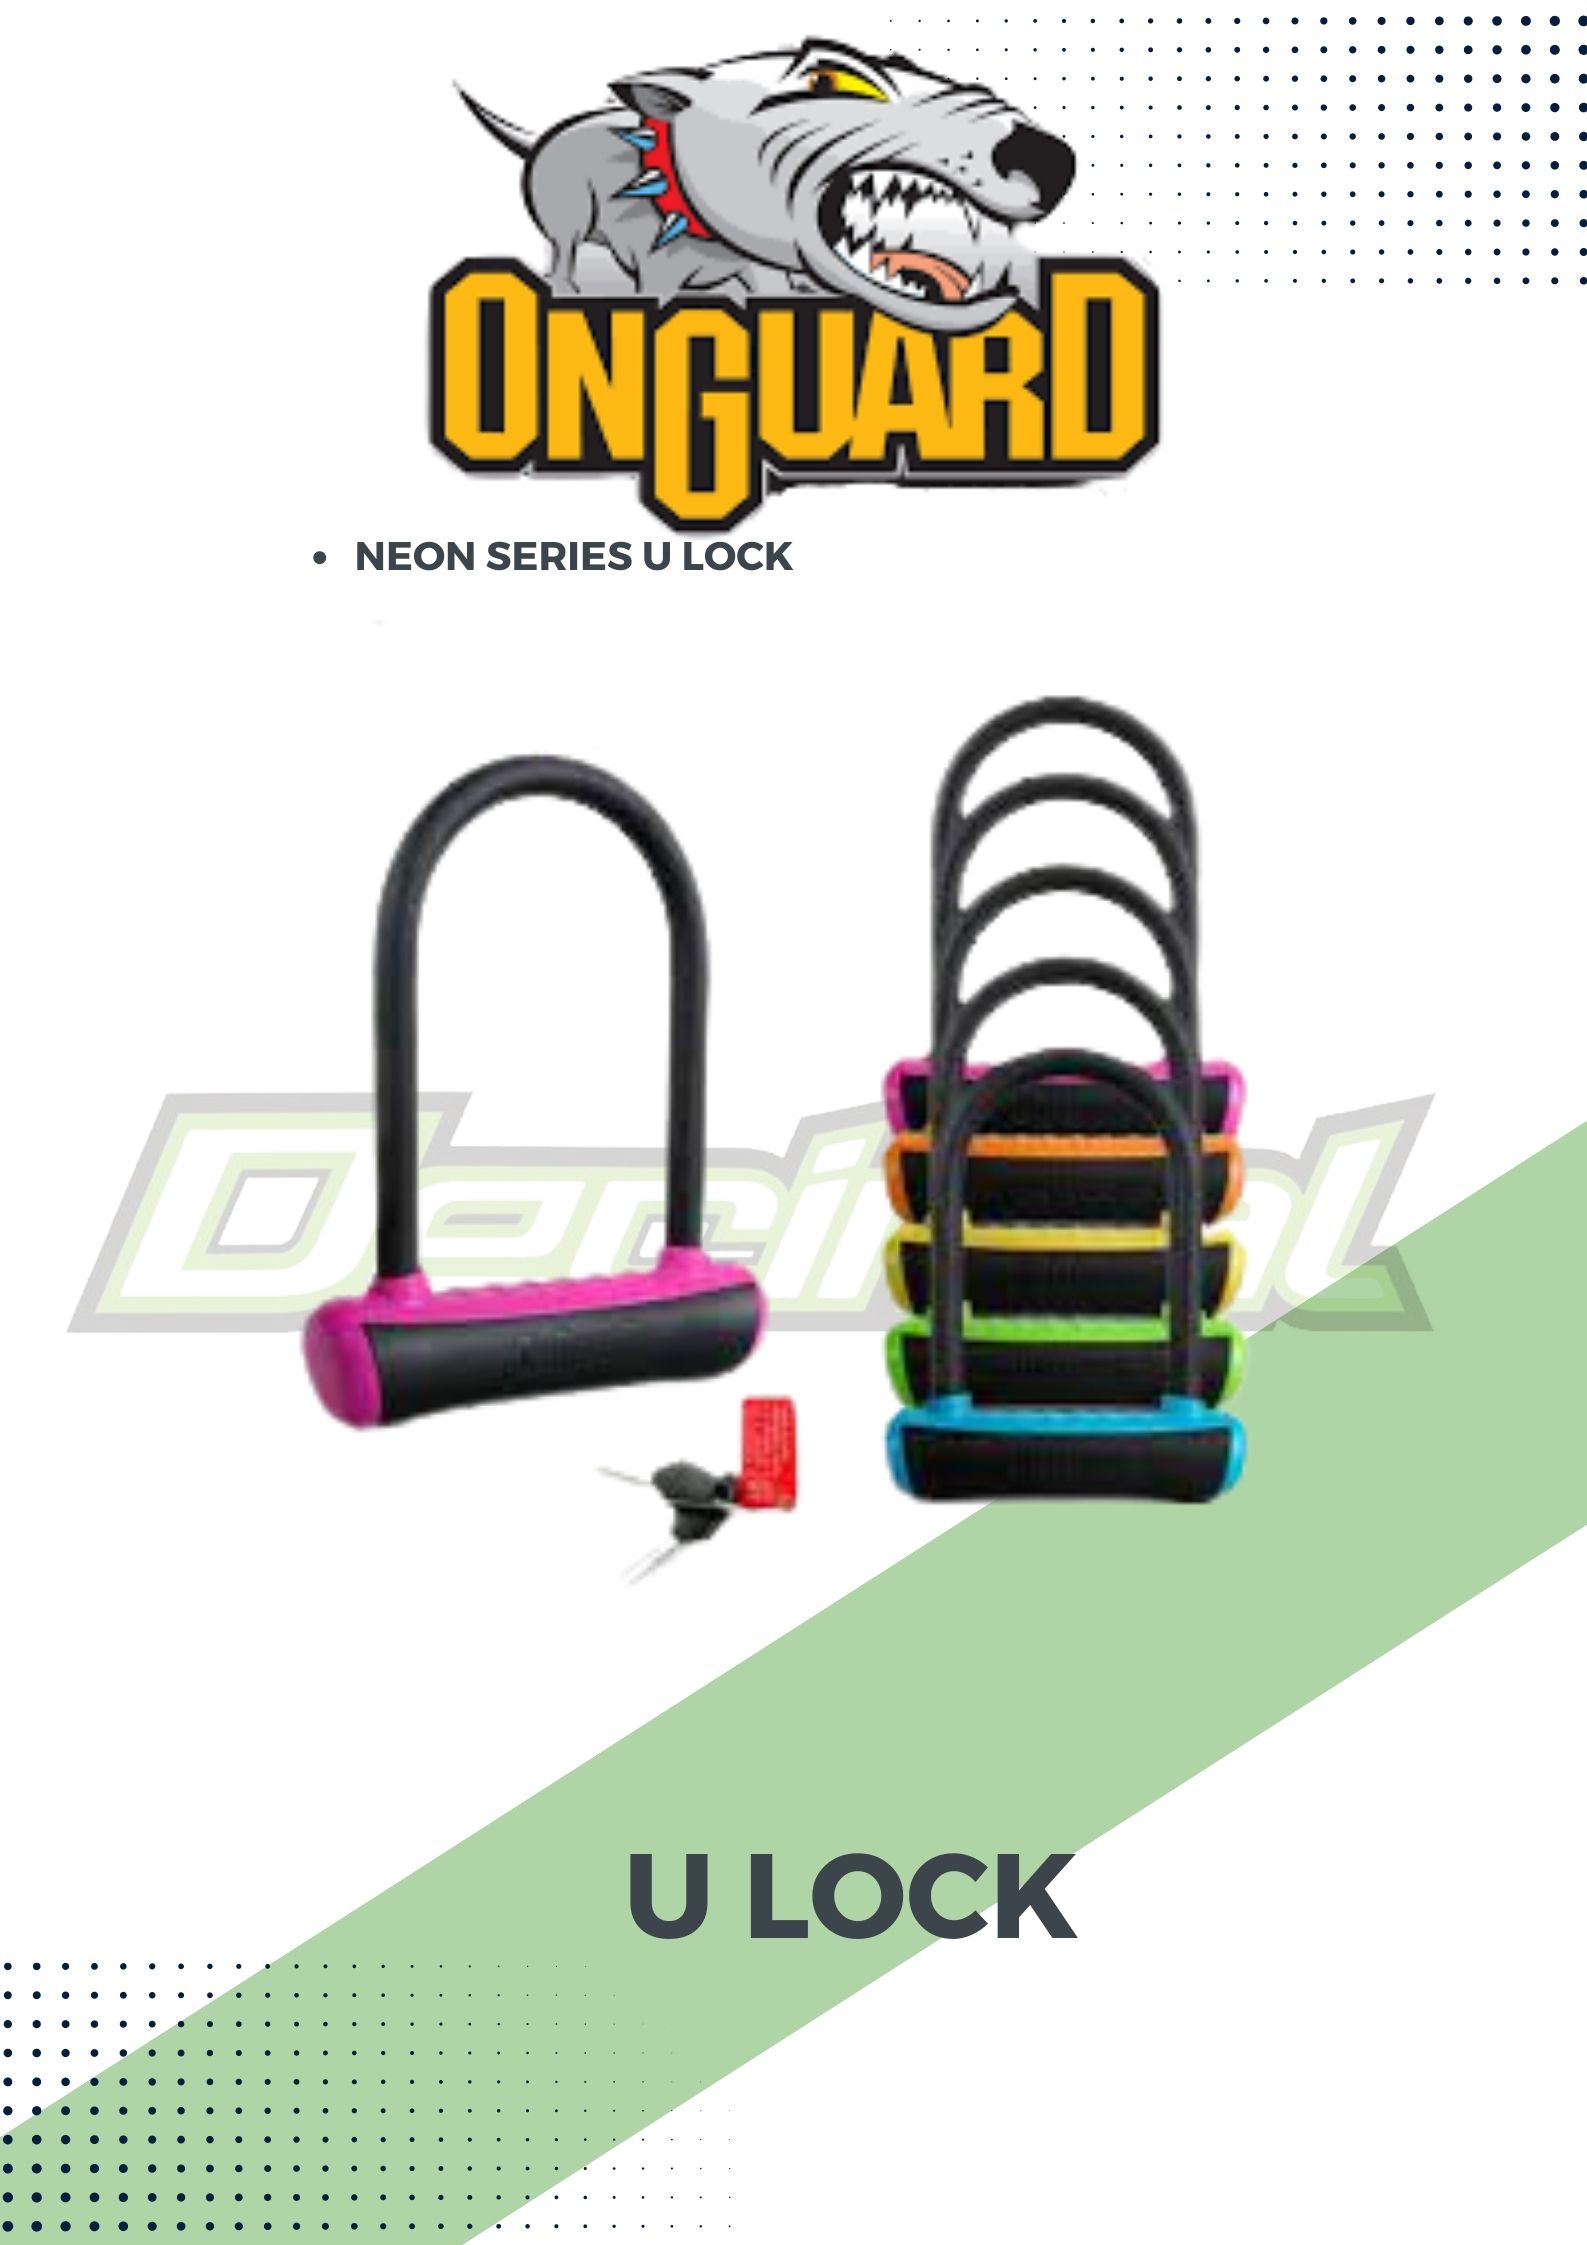 Candado U-Lock ONGUARD NEONS 